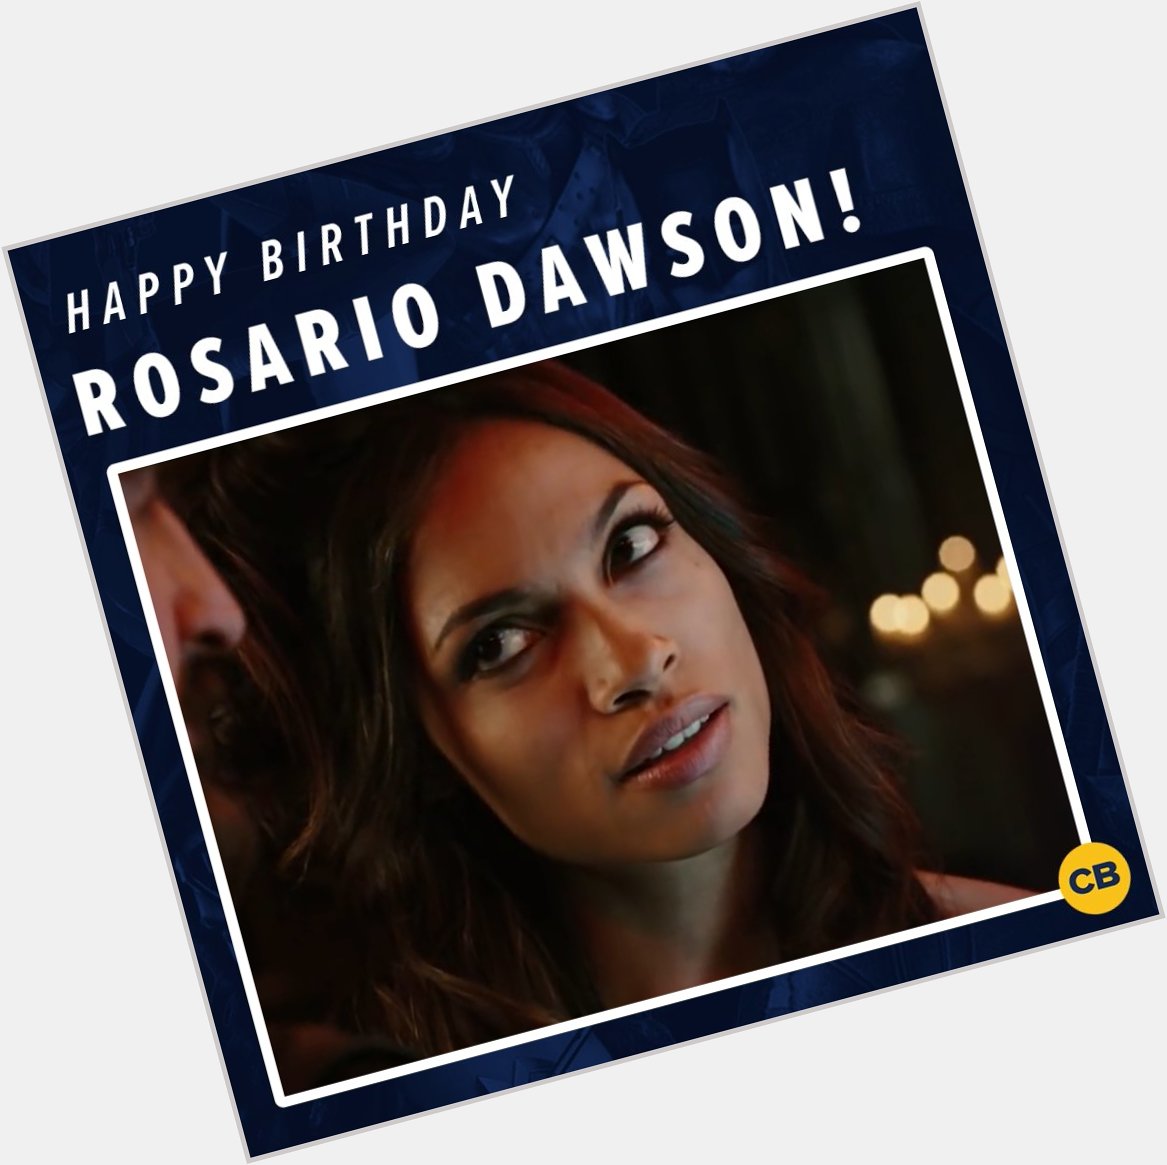 Happy birthday to The Defenders star, Rosario Dawson! 